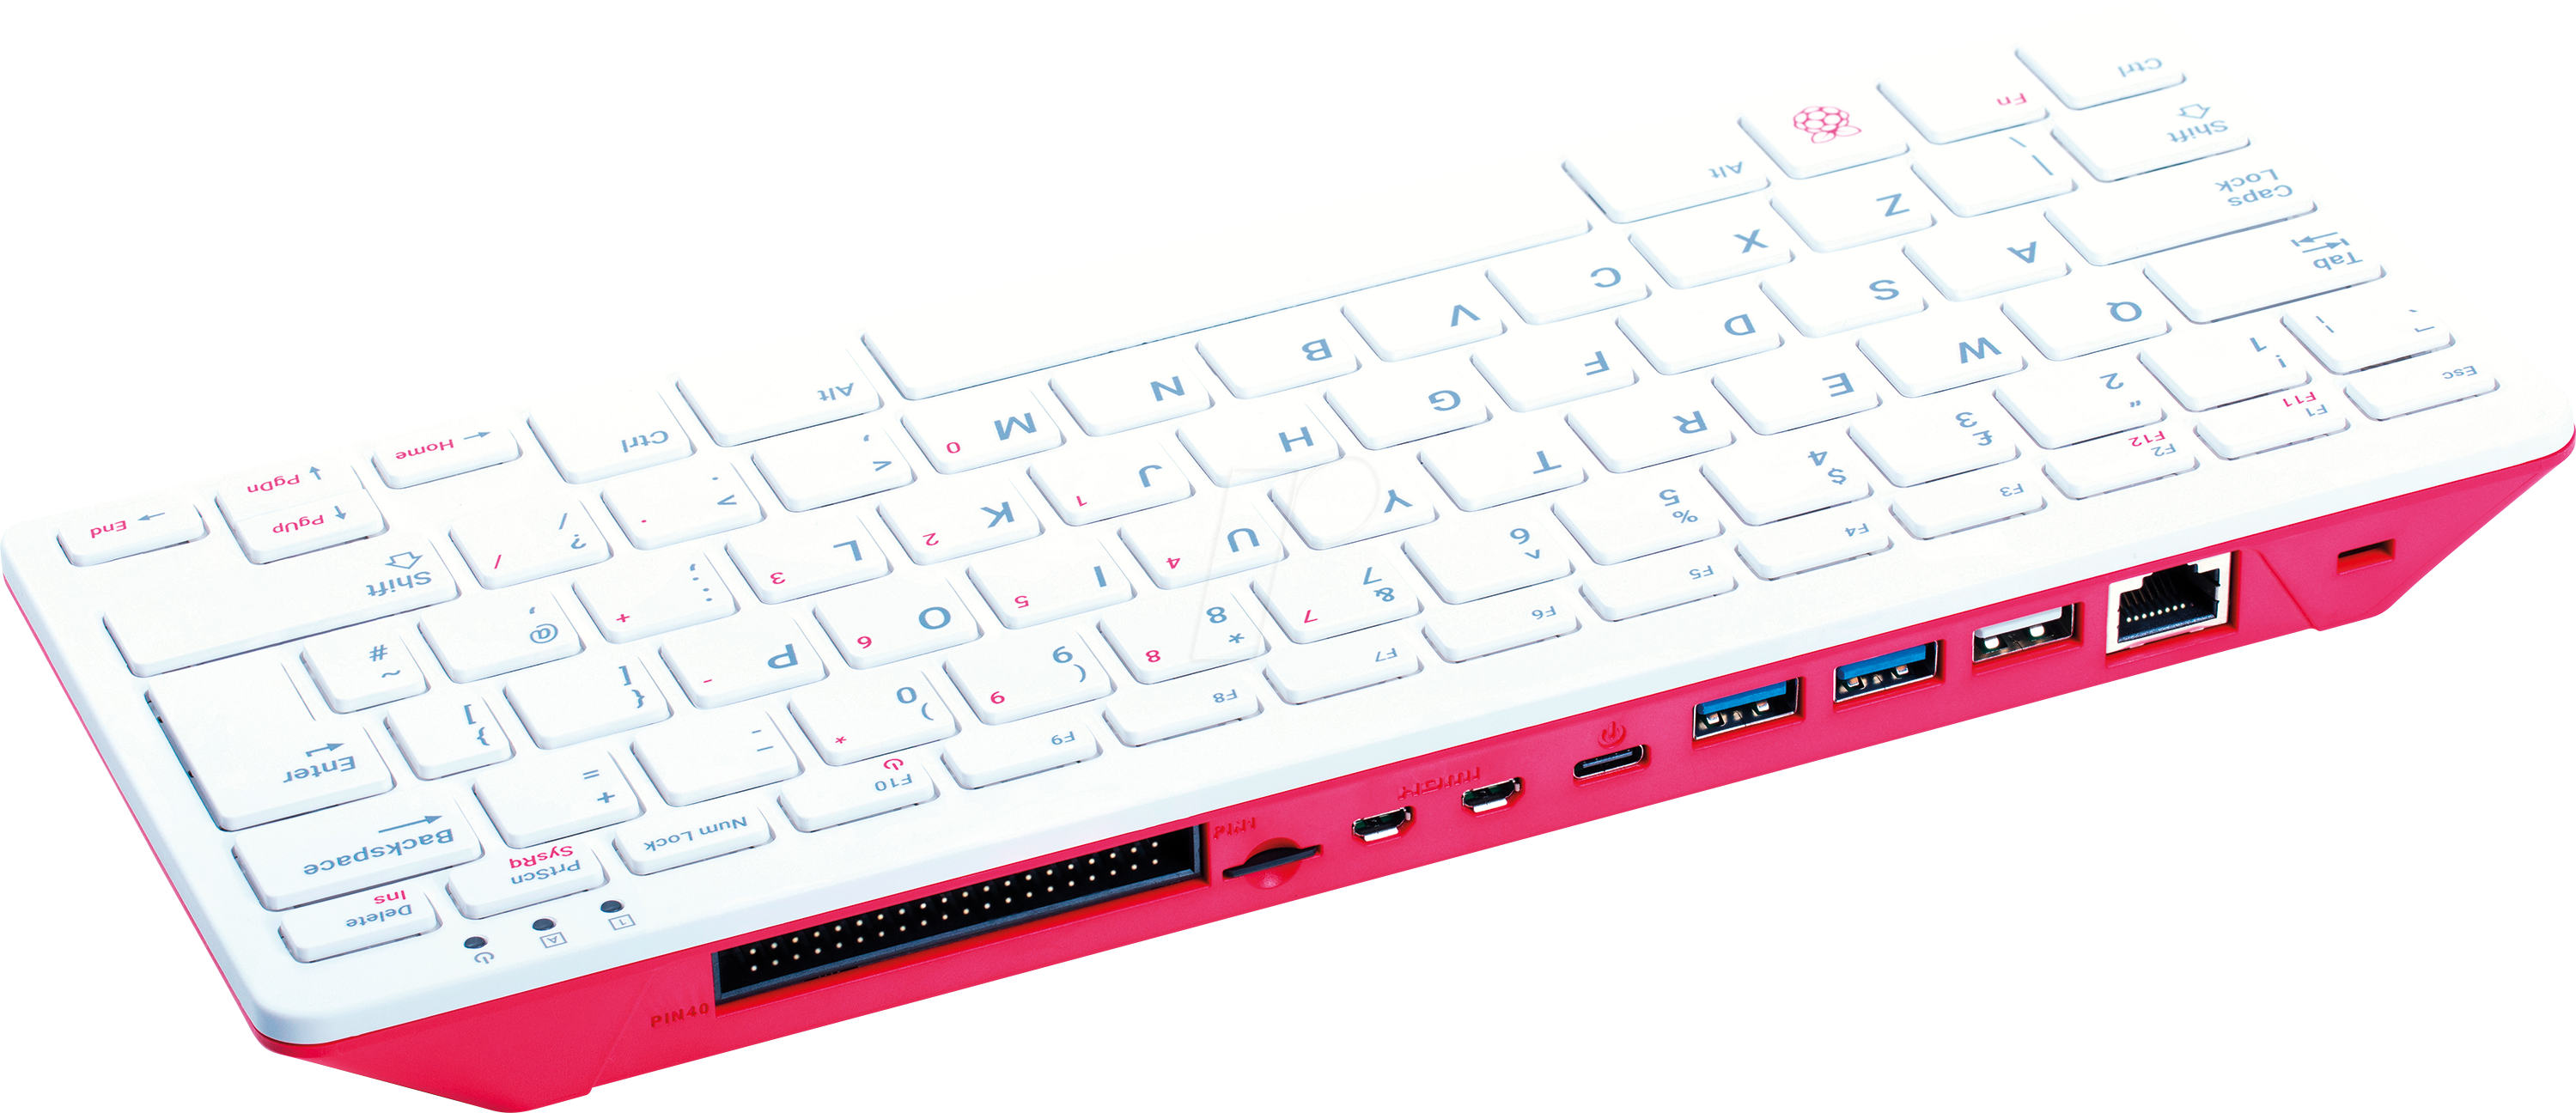 RASP PI400FR - Raspberry Pi 400 (FR), 4x 1,8GHz, 4GB RAM